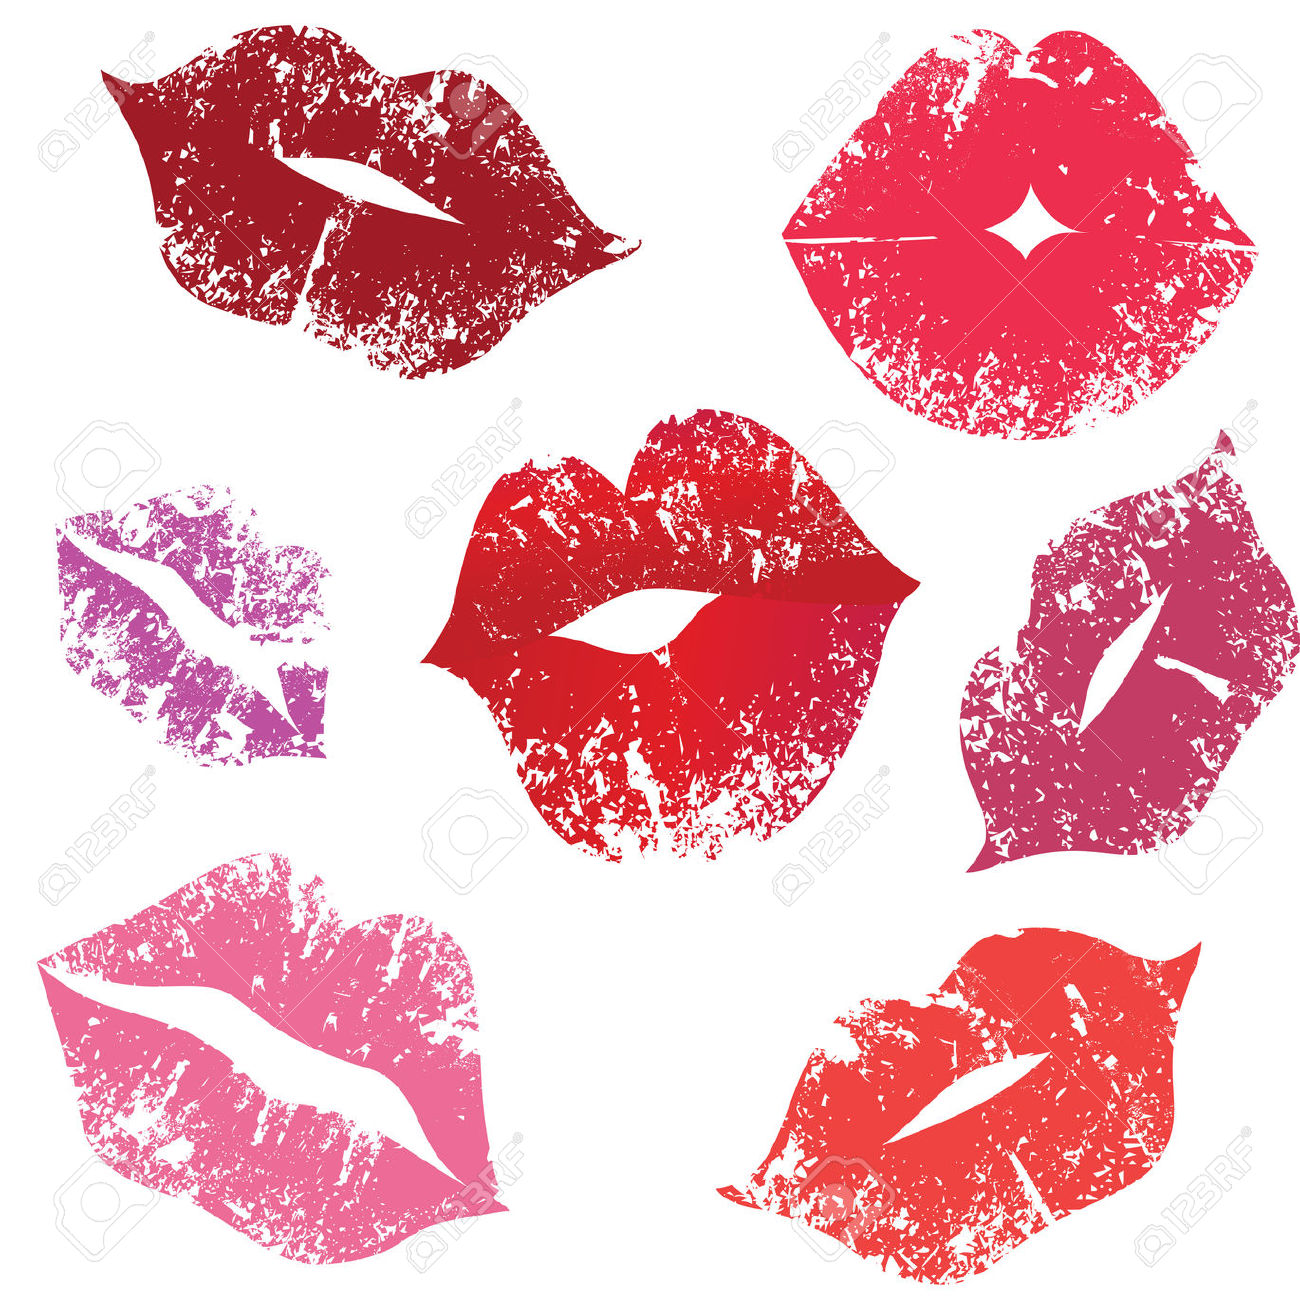 Kiss lips clipart getbellhop